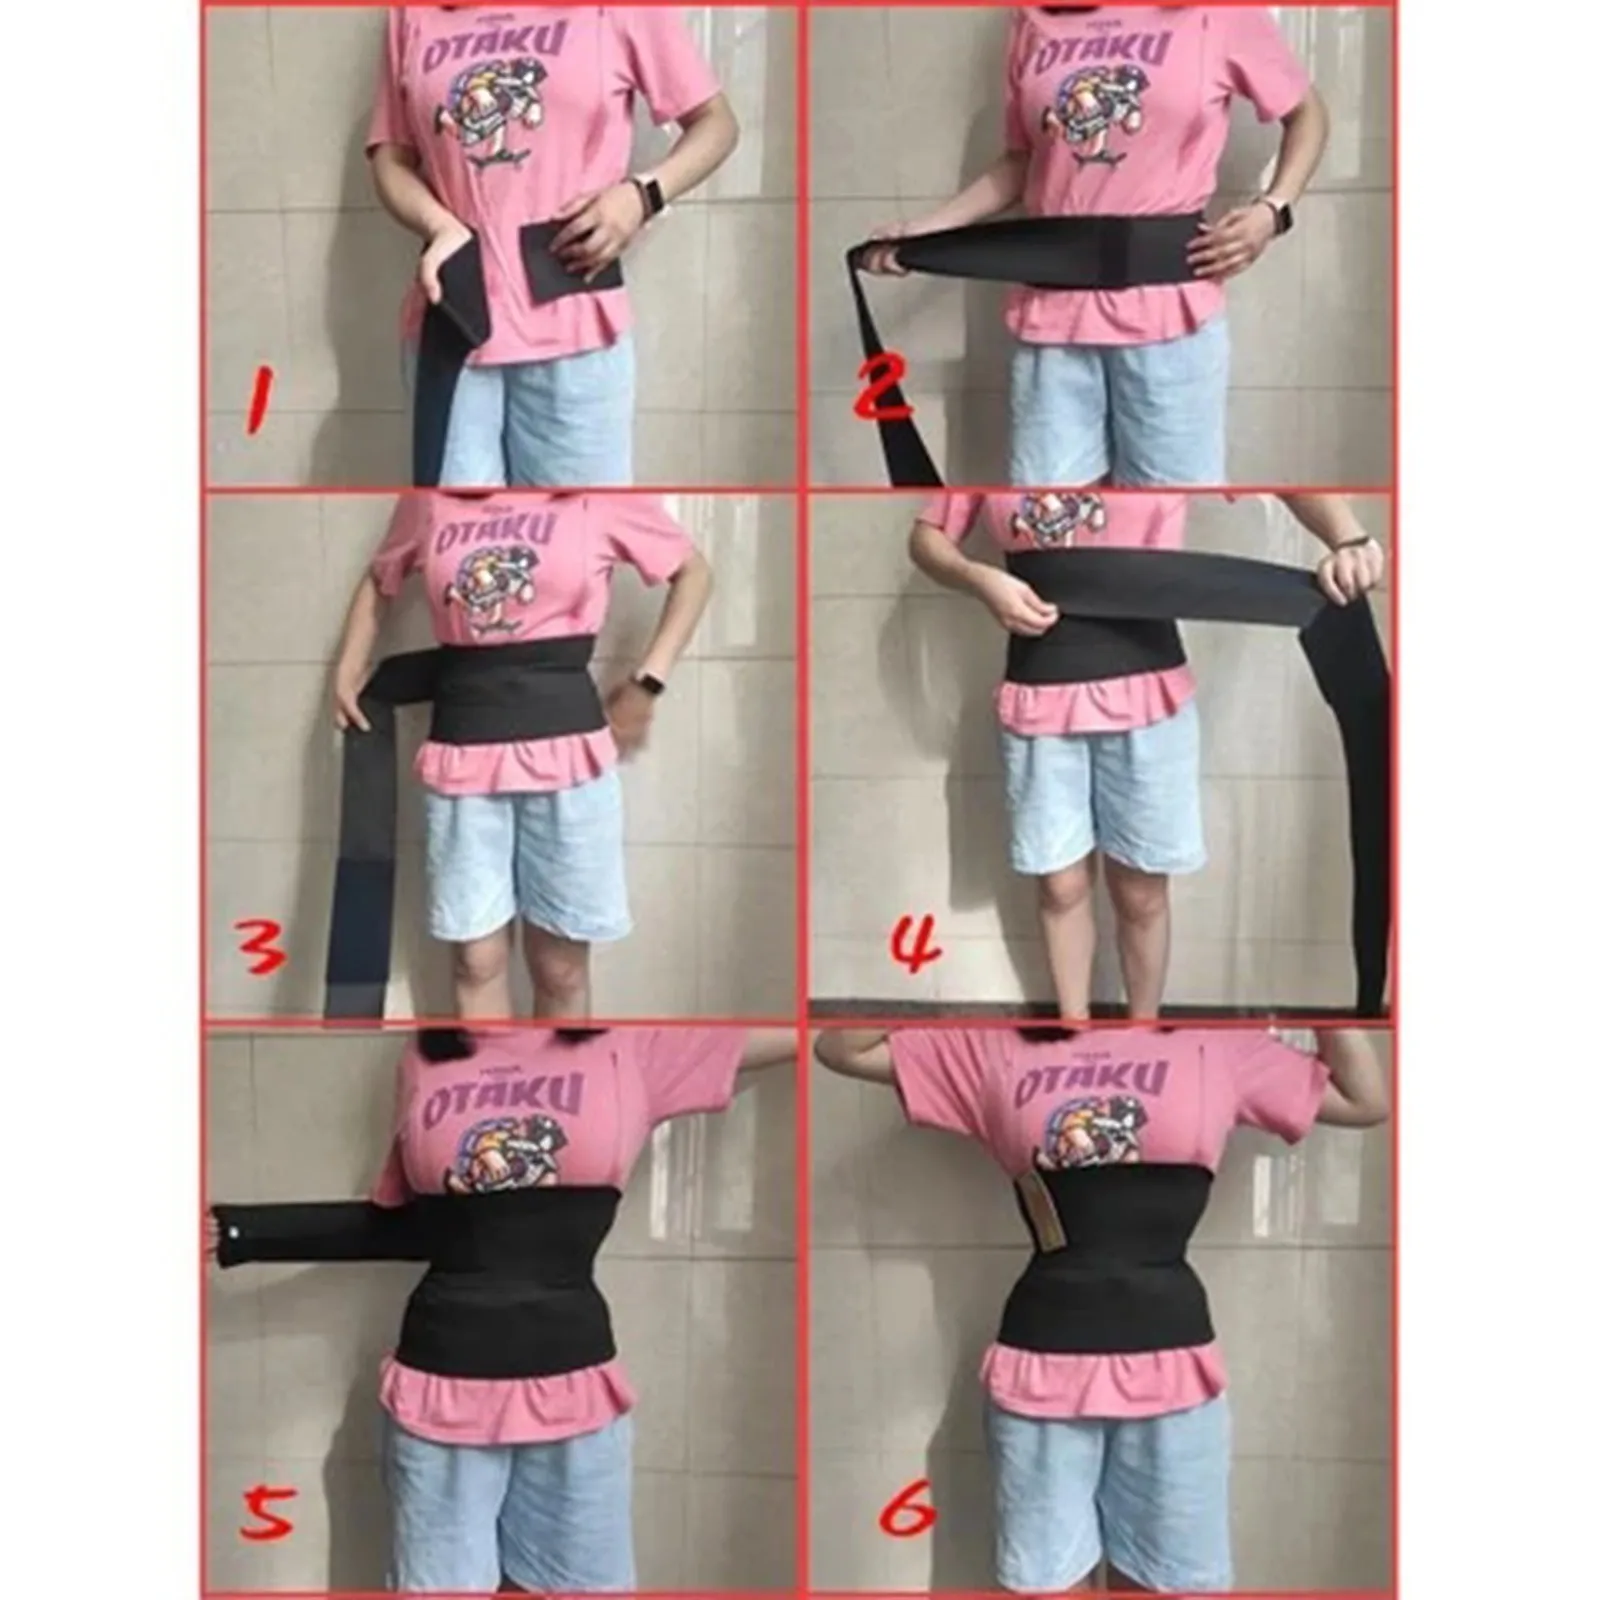 tummy tucker for women Belt Bandage Wrap Tummy Belly Body Corset Top Body Shaper Postpartum Reductive Braces For Lower Back Trimmer  Belt Body Strap thong shapewear